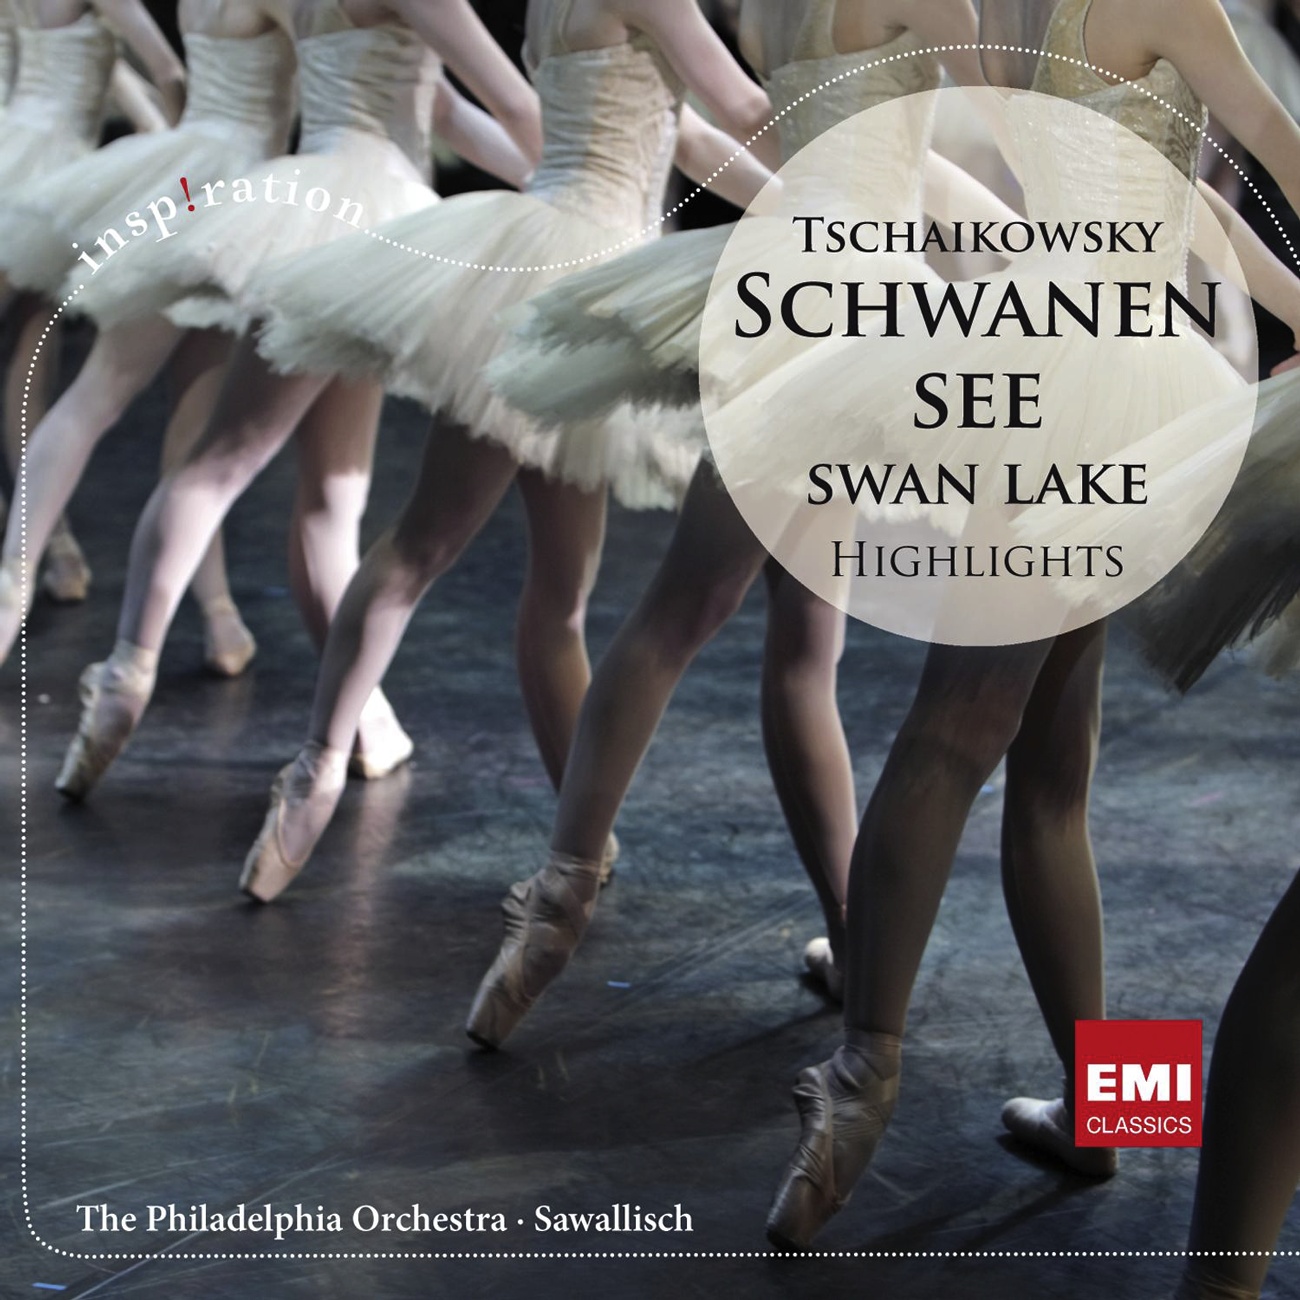 Swan Lake - Ballet in four acts Op. 20, ACT 3: No. 23 - Mazurka (Solistes et corps de ballet) (Tempo di Mazurka)